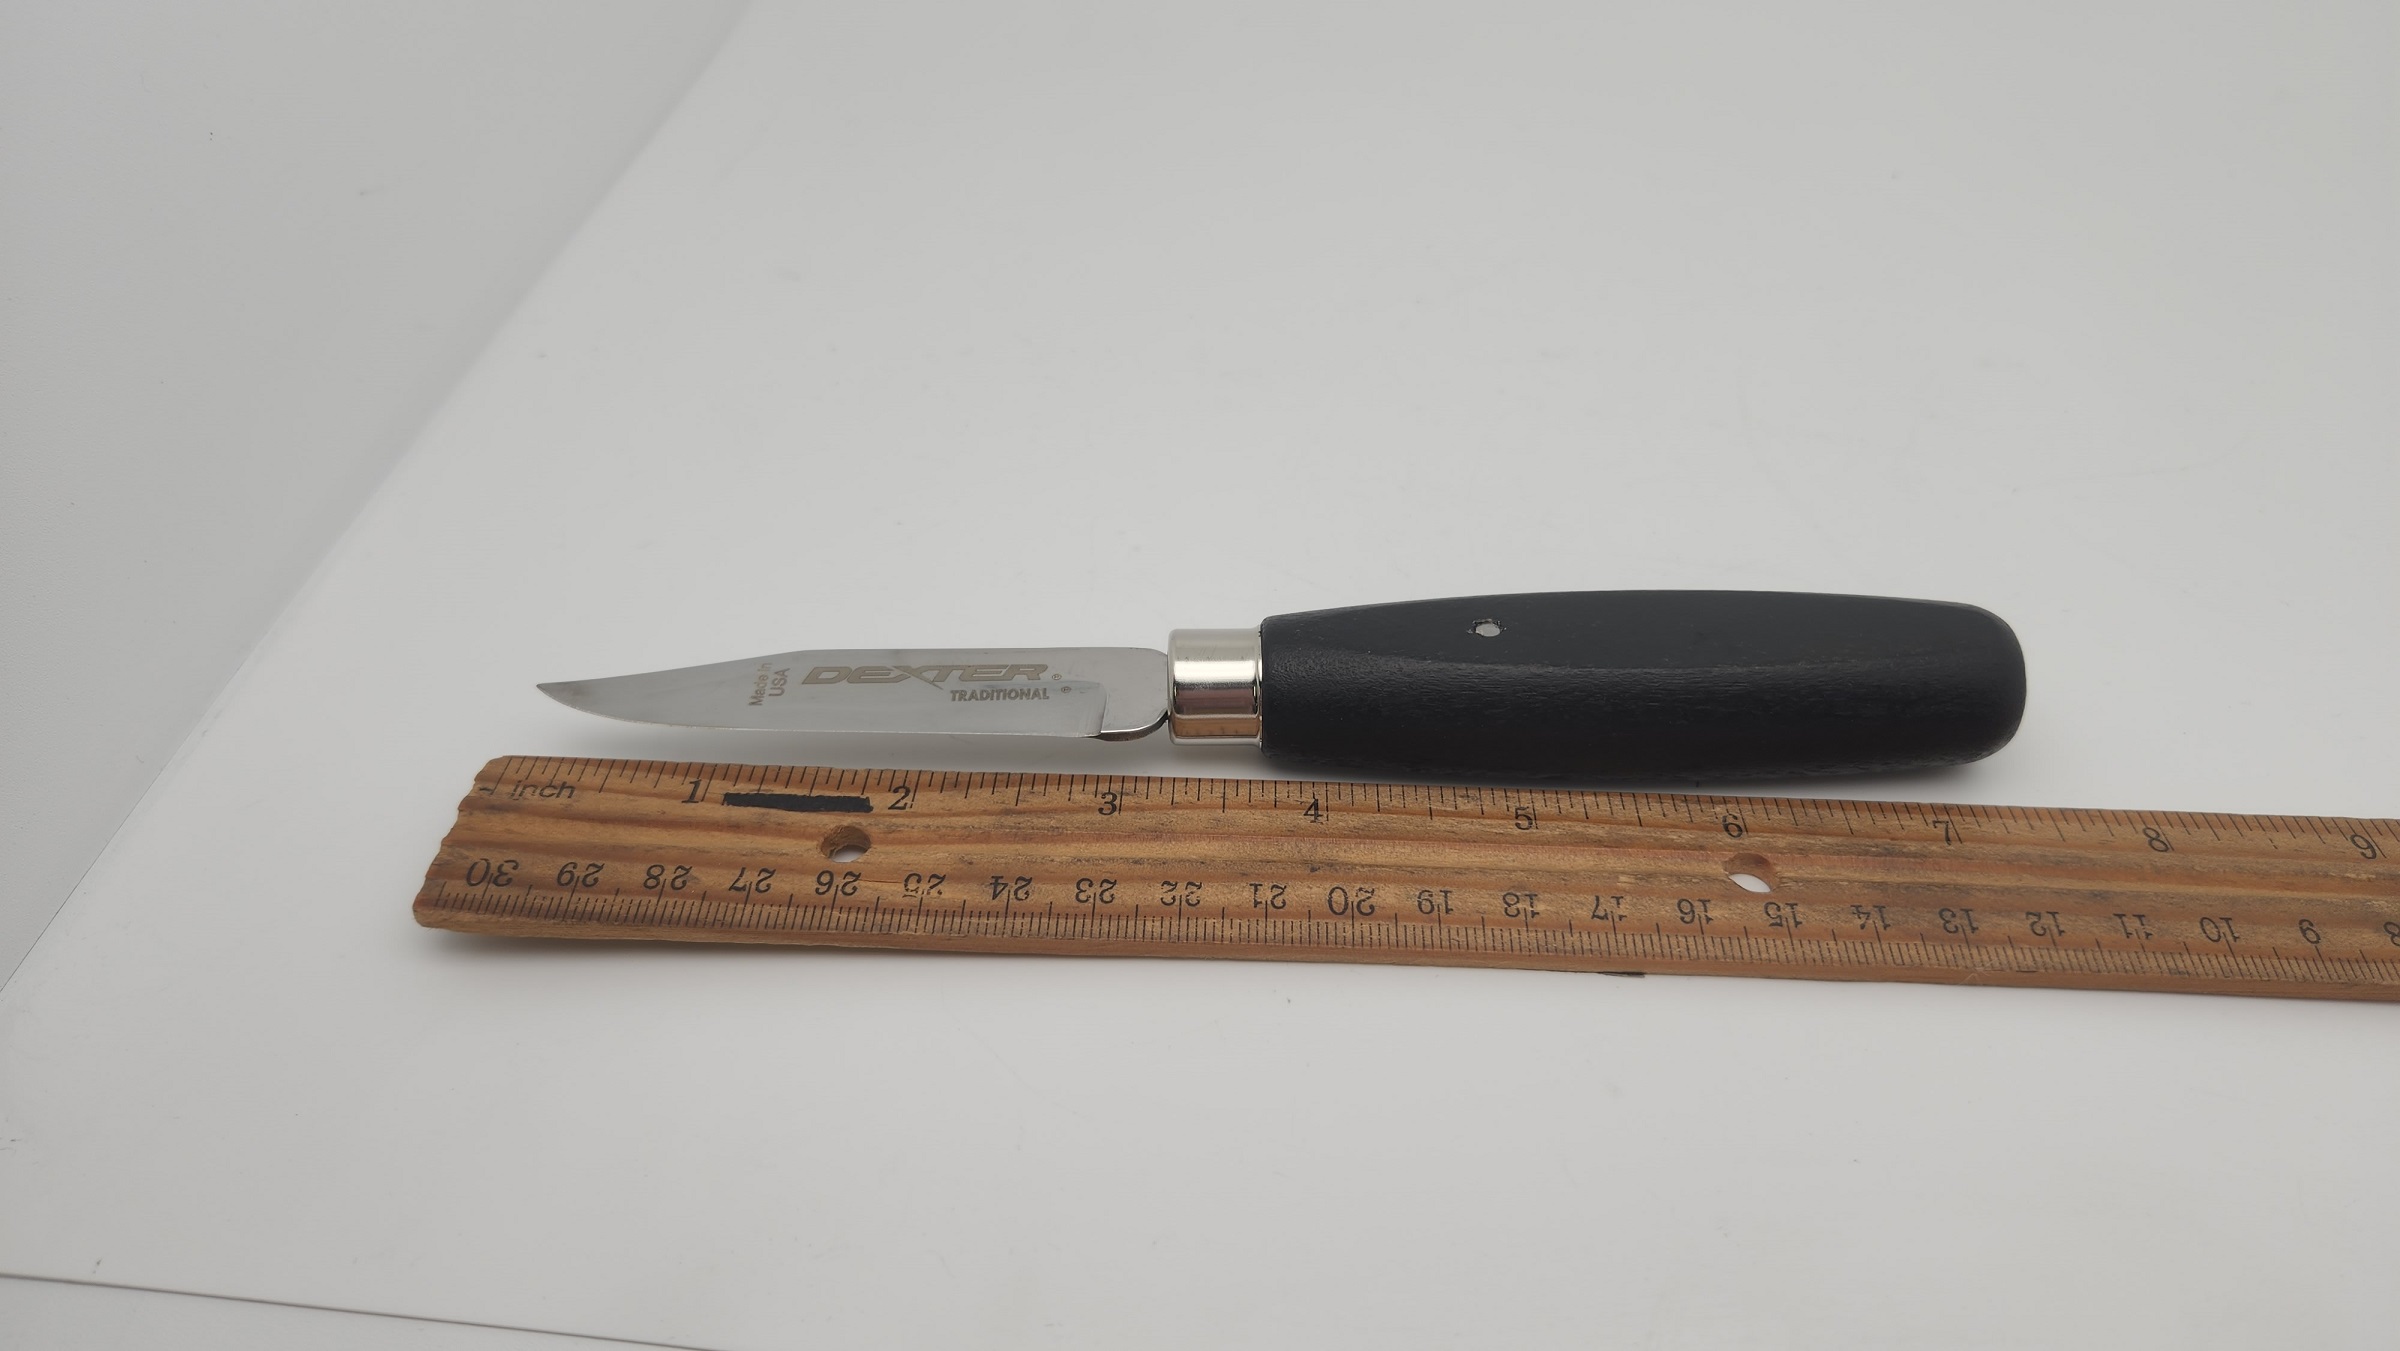 Dexter-Russell 20332 Traditional Slant Wooden Knife Block